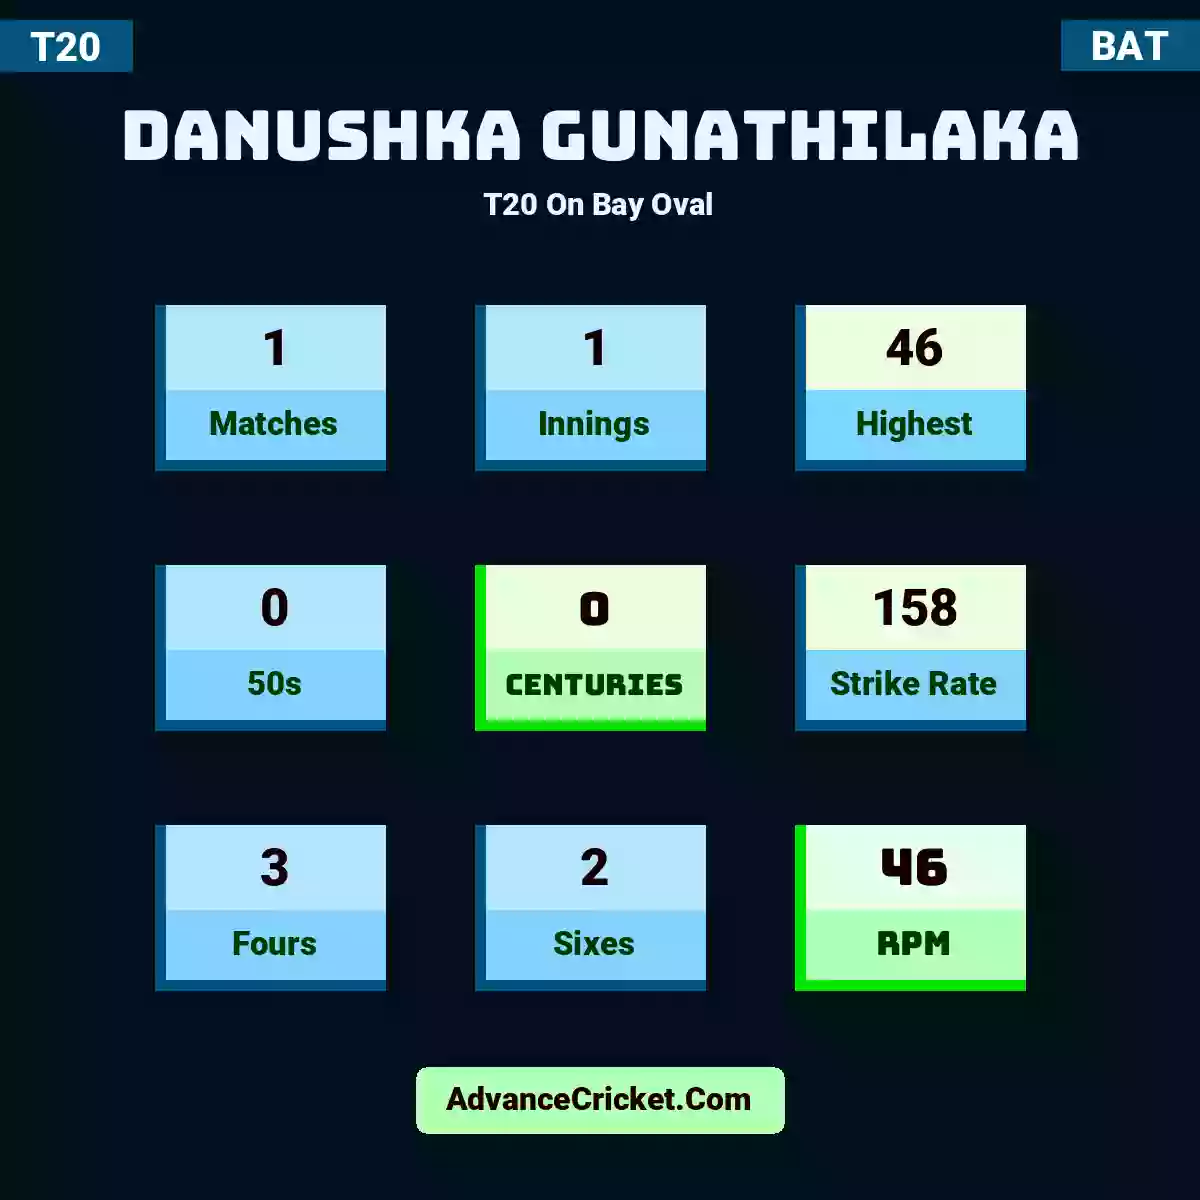 Danushka Gunathilaka T20  On Bay Oval, Danushka Gunathilaka played 1 matches, scored 46 runs as highest, 0 half-centuries, and 0 centuries, with a strike rate of 158. D.Gunathilaka hit 3 fours and 2 sixes, with an RPM of 46.